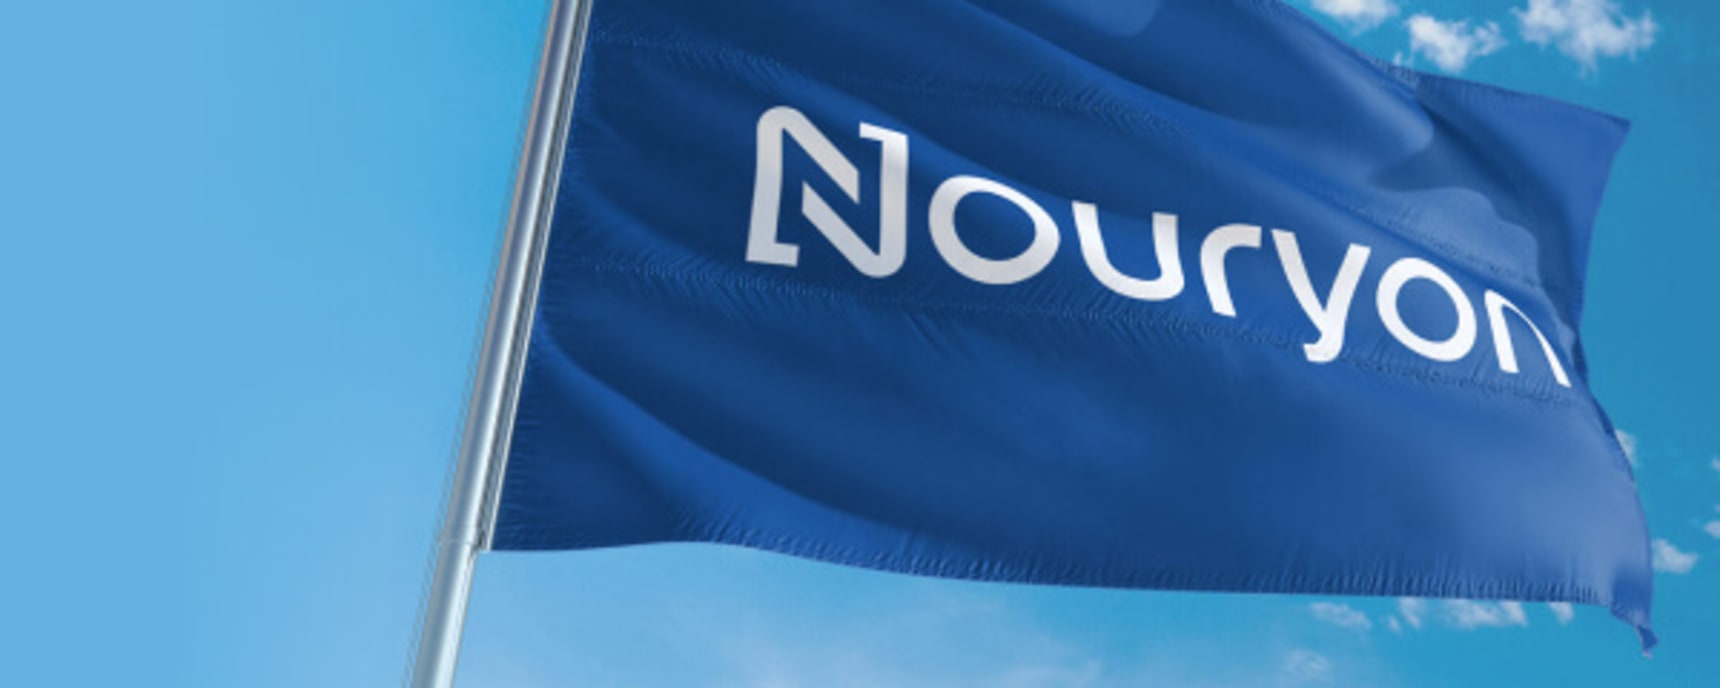 Nouryon banner